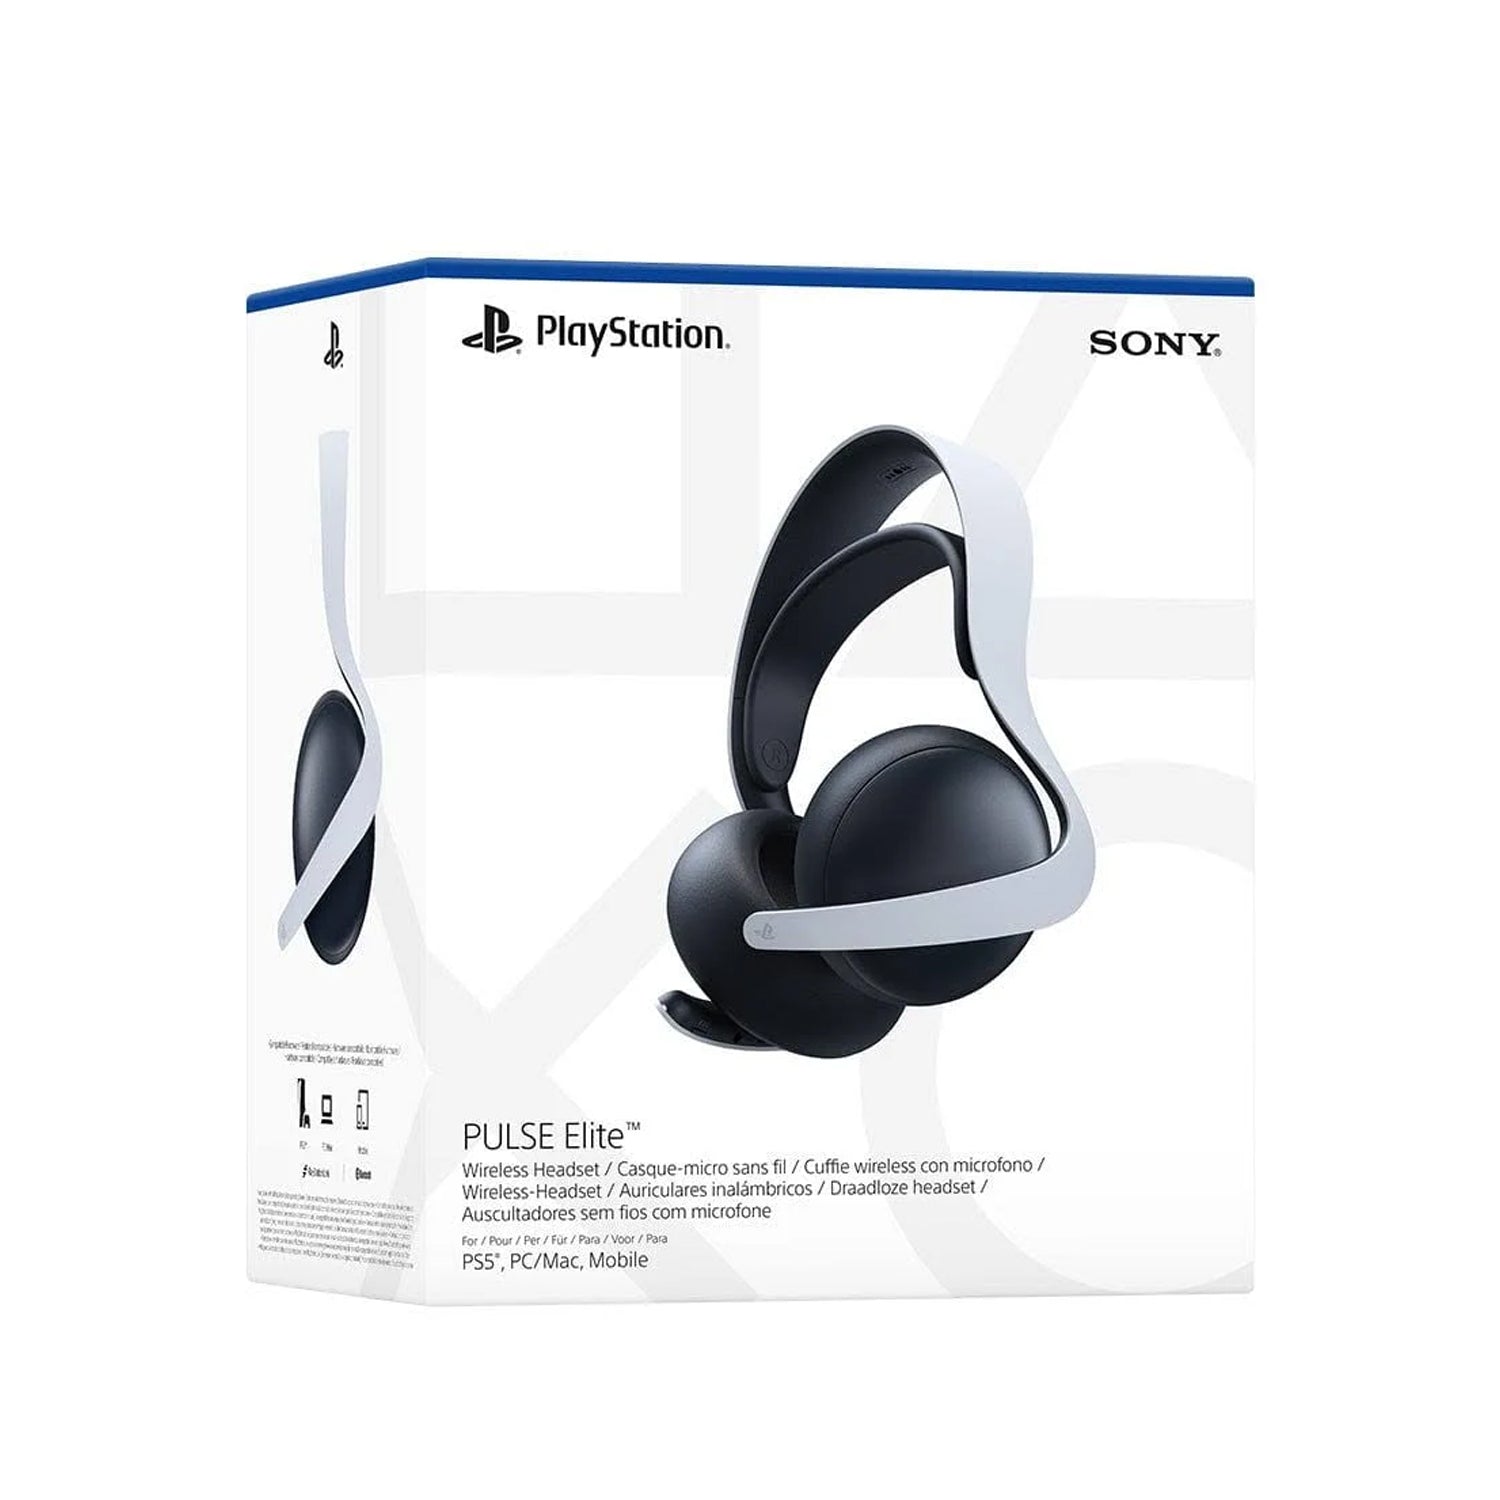 Sony PlayStation Pulse Elite Wireless Headset